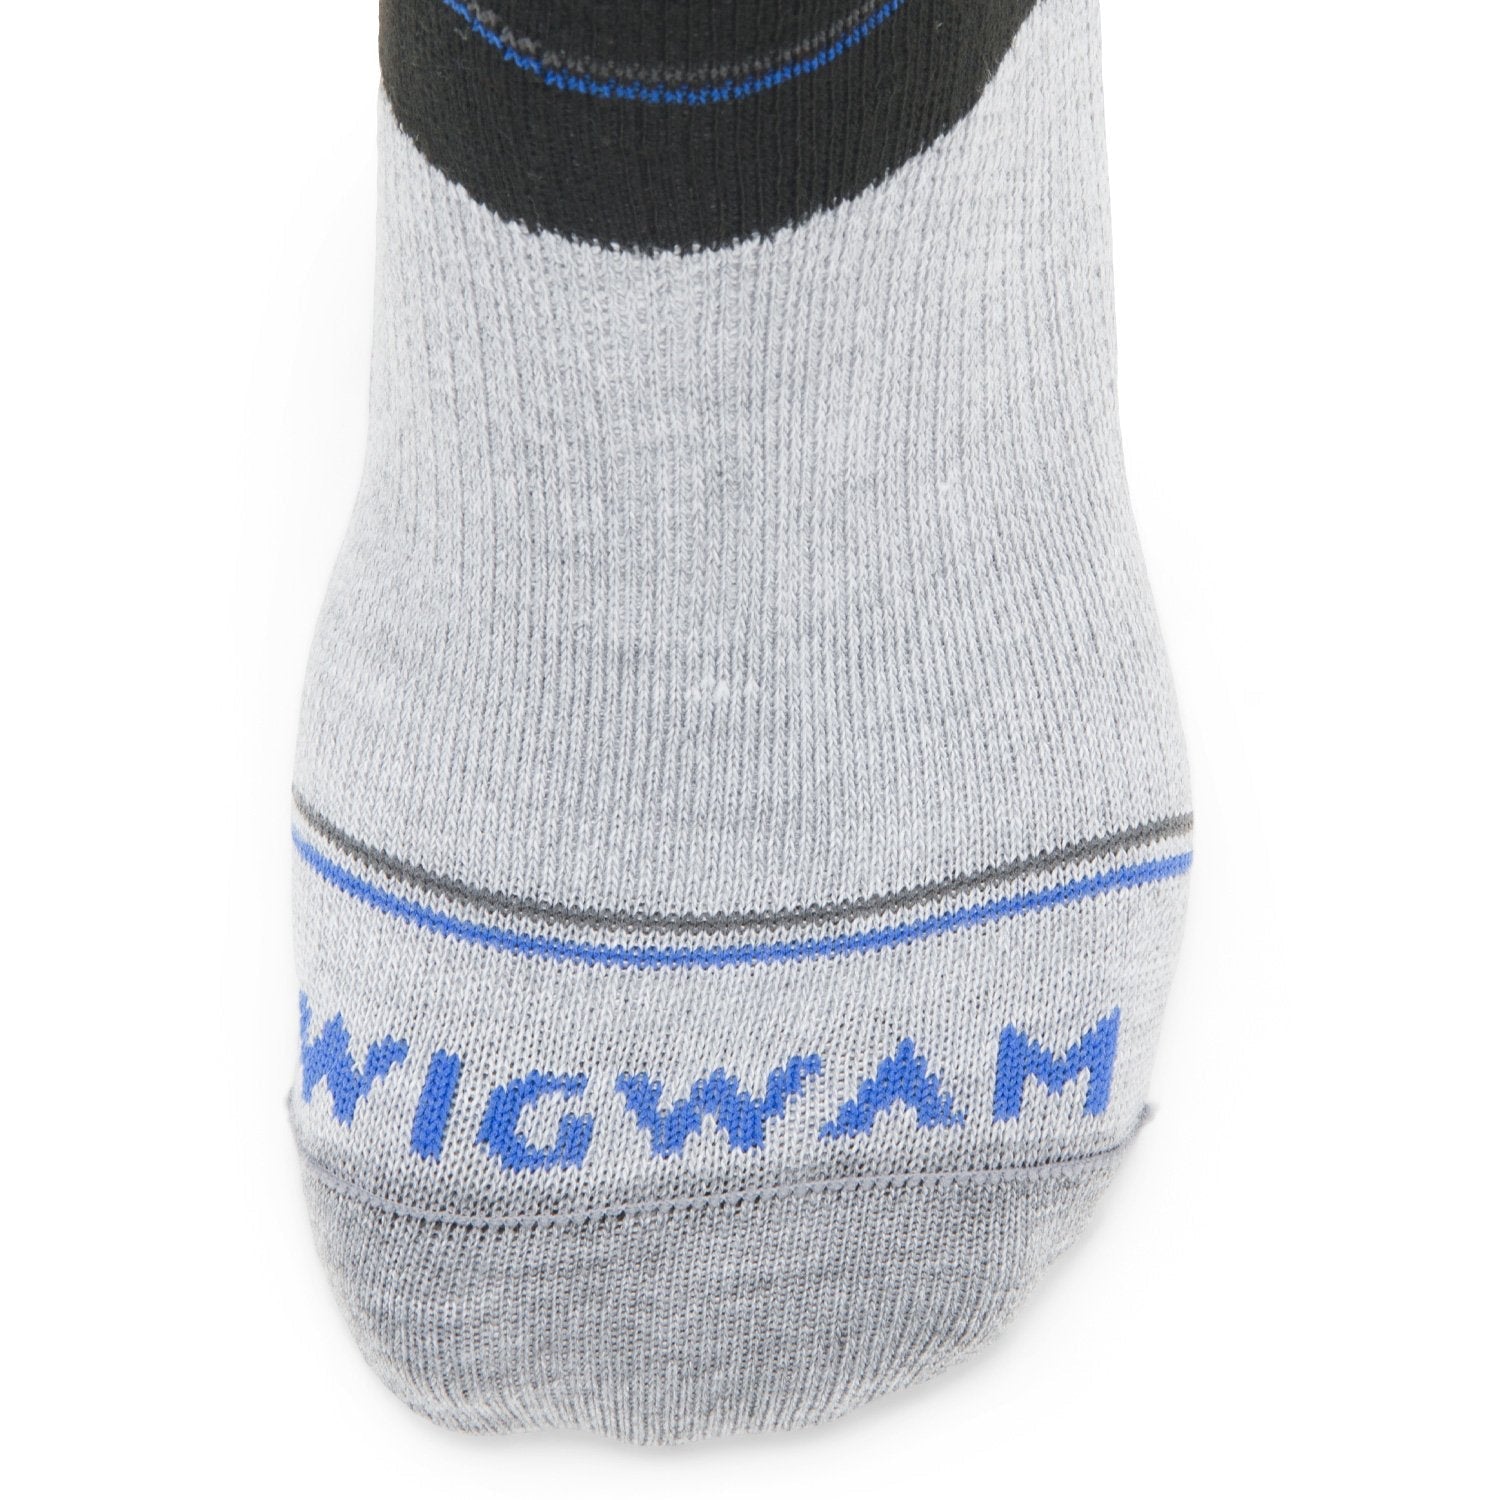 Surpass Ultra Lightweight Low Sock - Black/Grey toe perspective - made in The USA Wigwam Socks